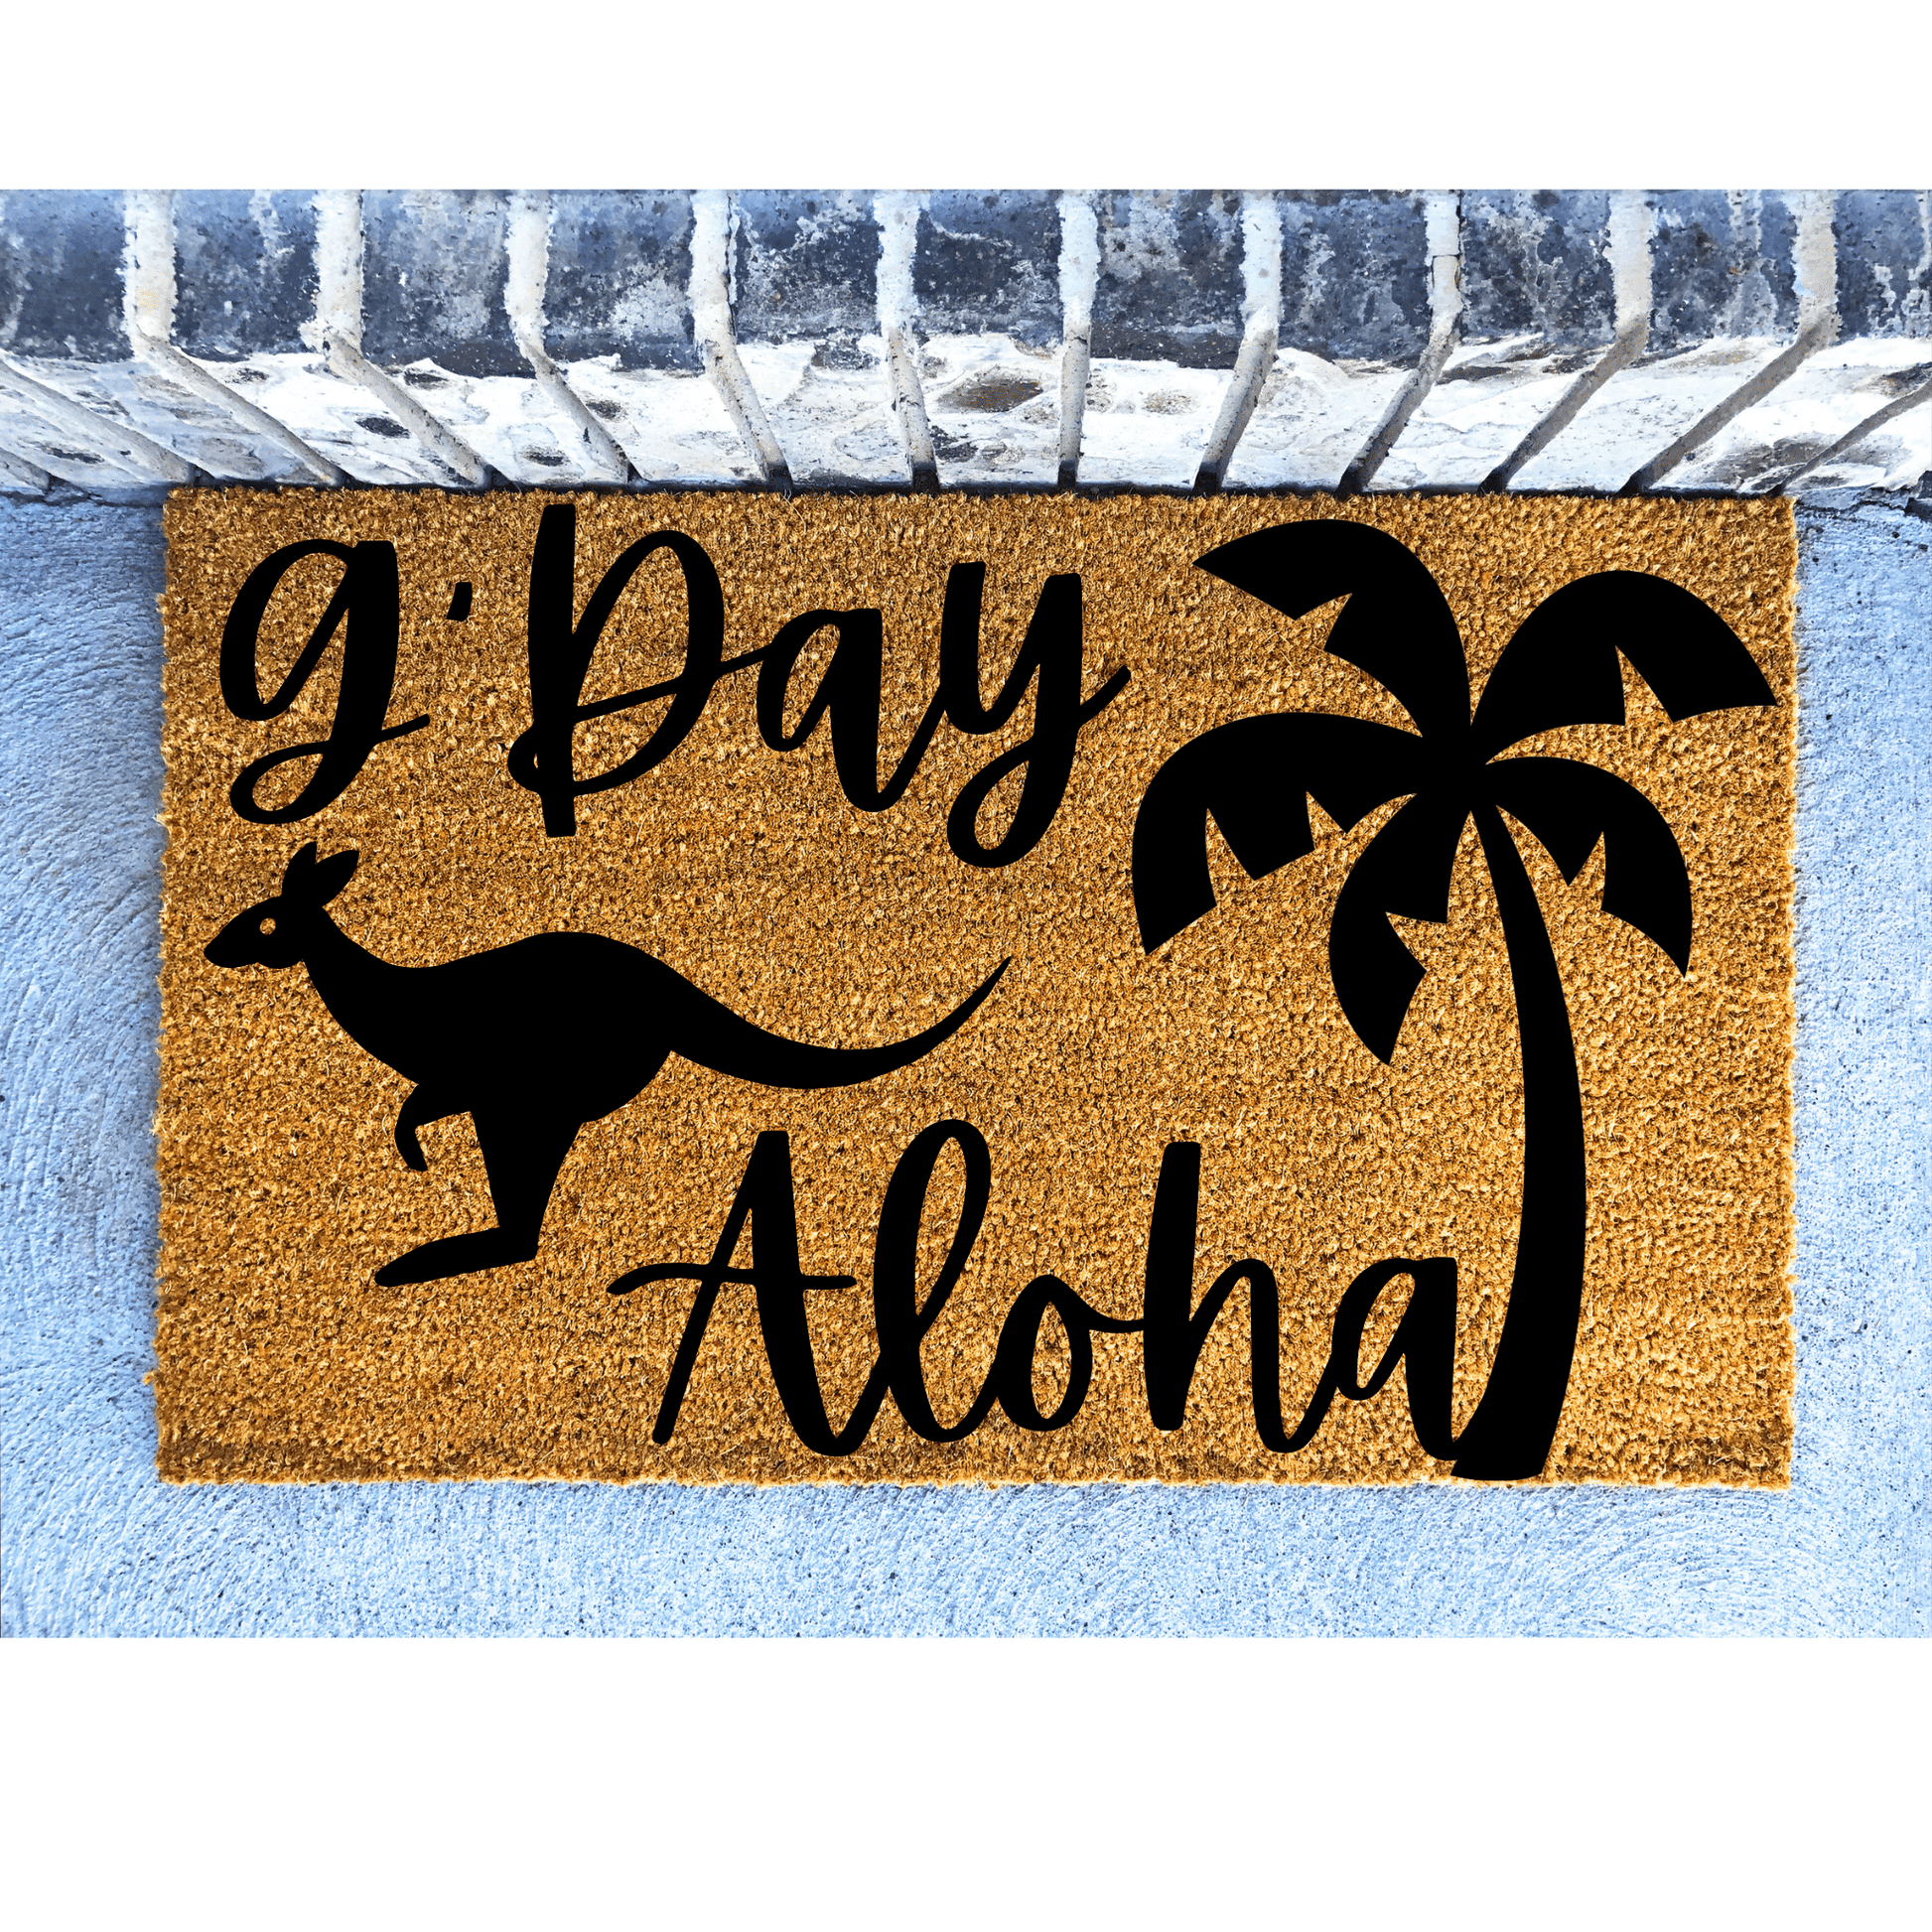 G'day Kangaroo Aloha Palm Tree doormat